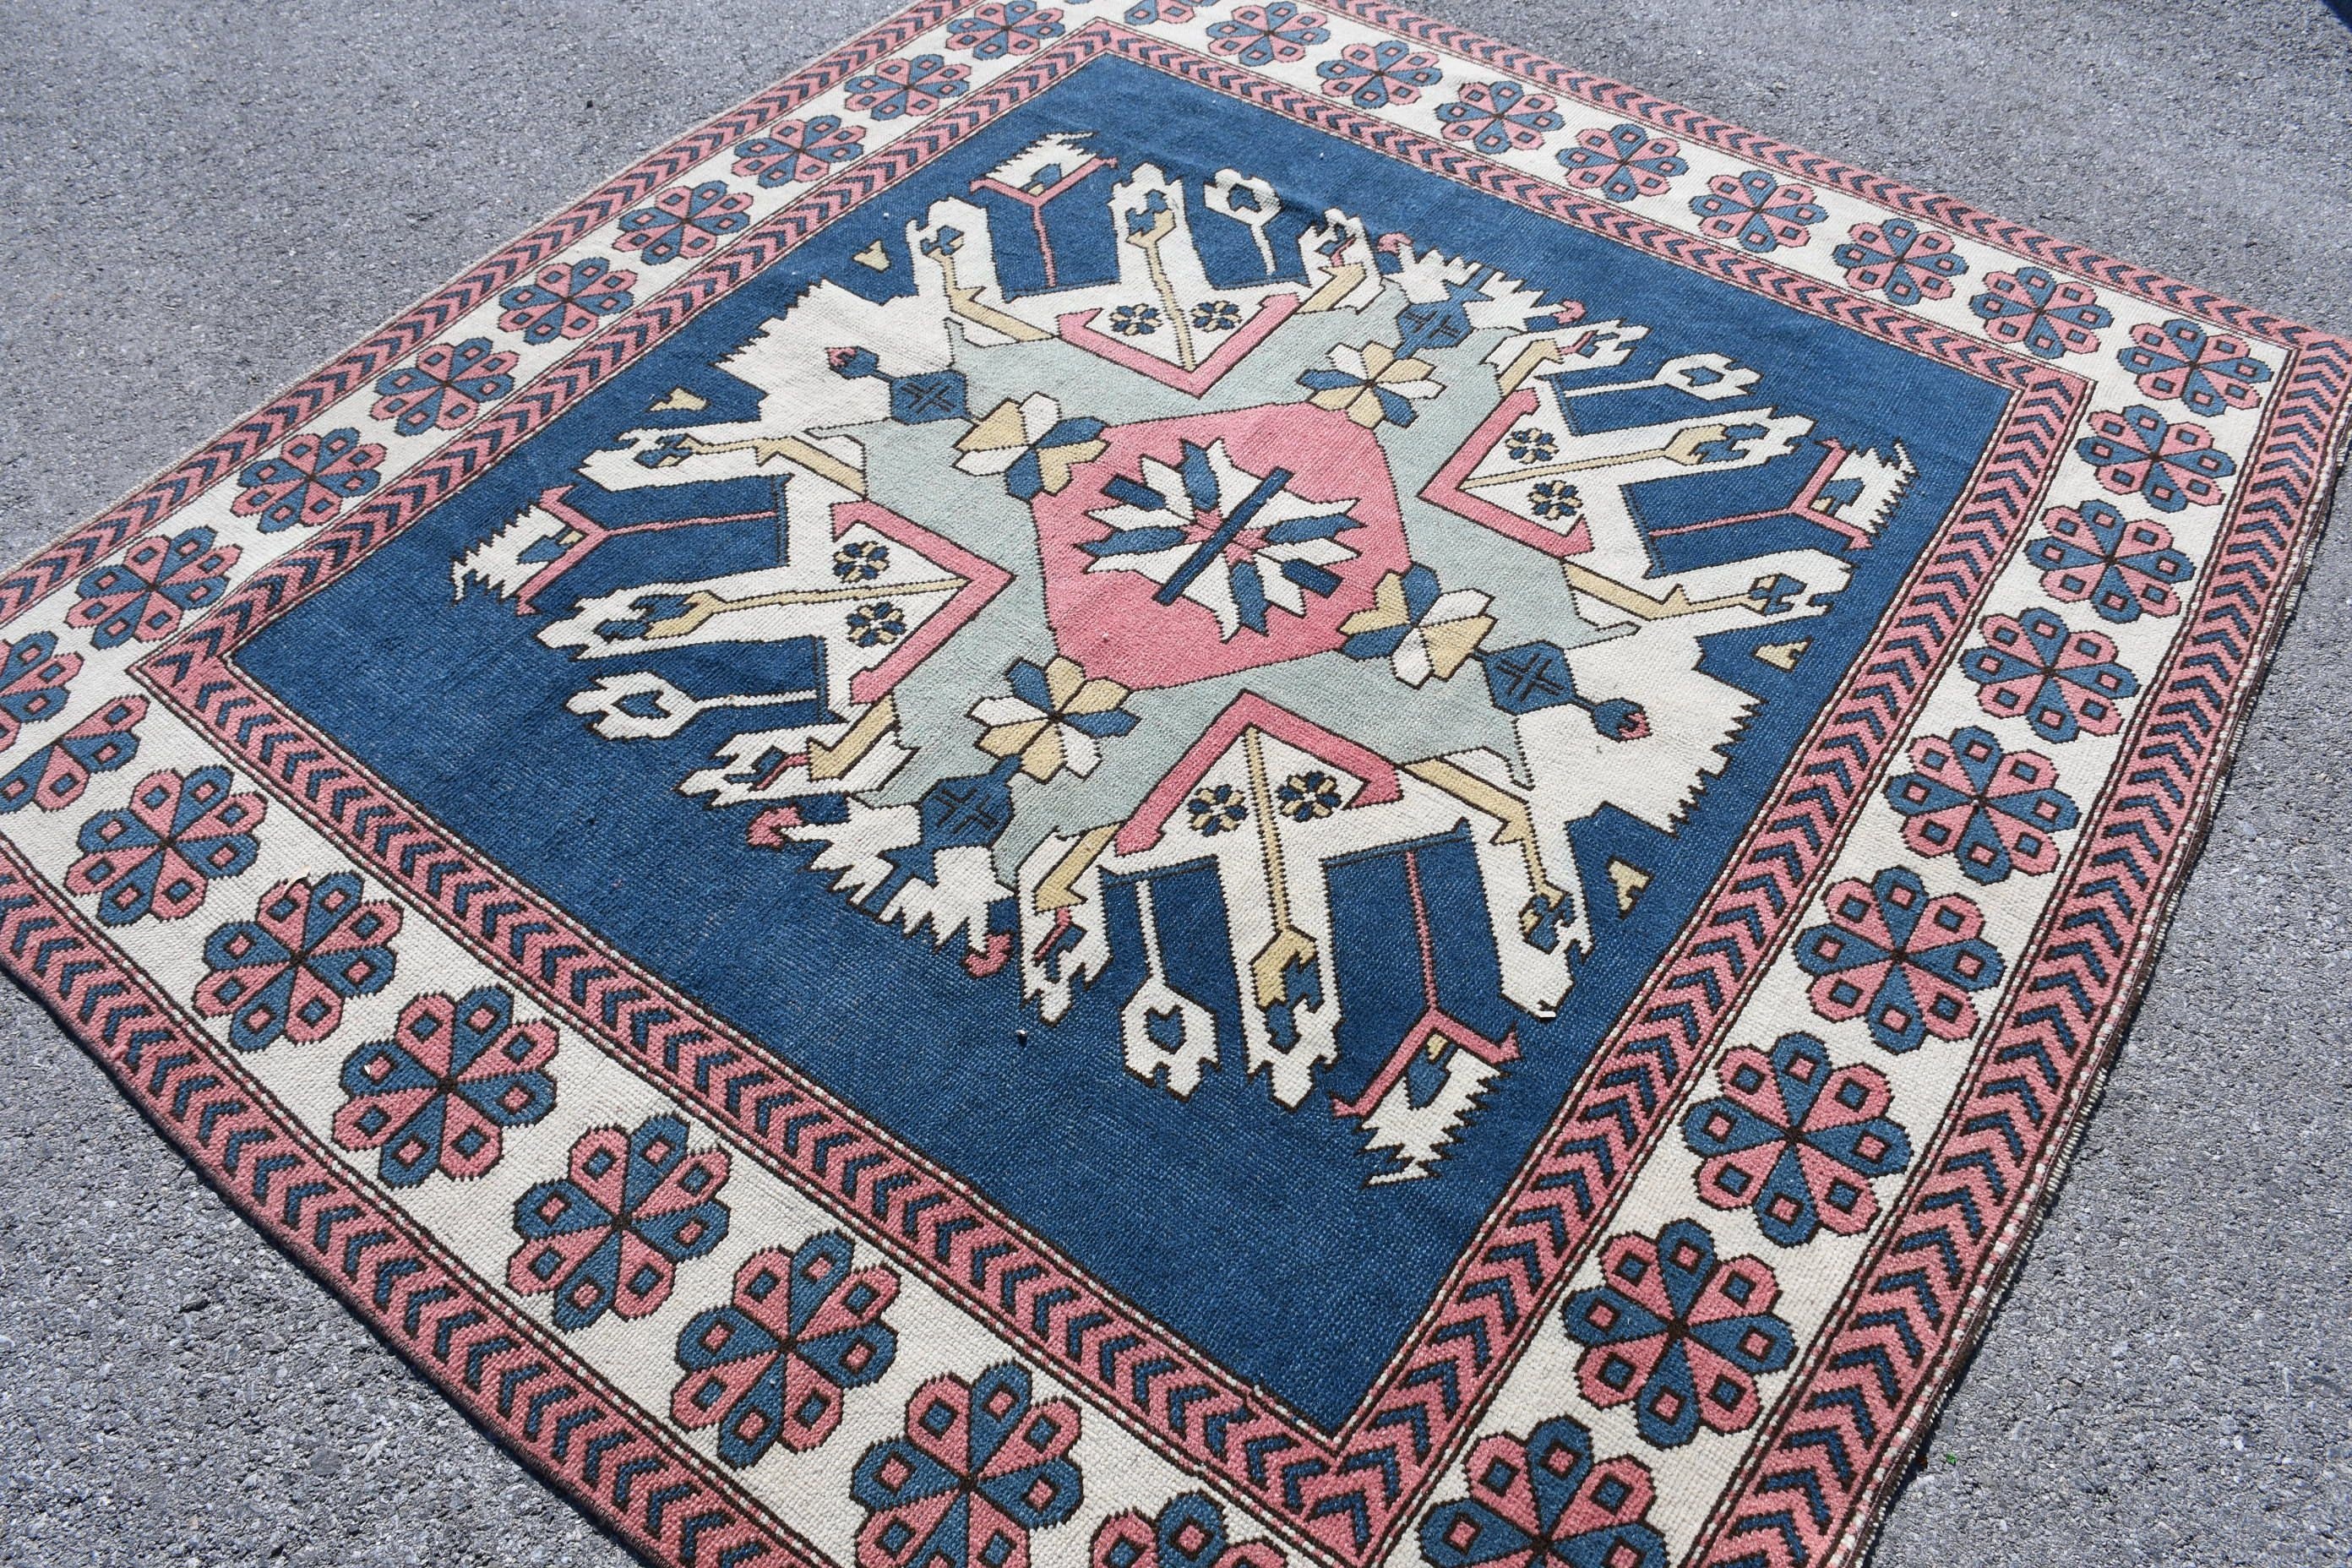 Moroccan Rug, Outdoor Rug, Living Room Rugs, Vintage Rug, Turkish Rug, Dining Room Rug, 7x6.6 ft Large Rugs, Antique Rugs, Blue Oushak Rug